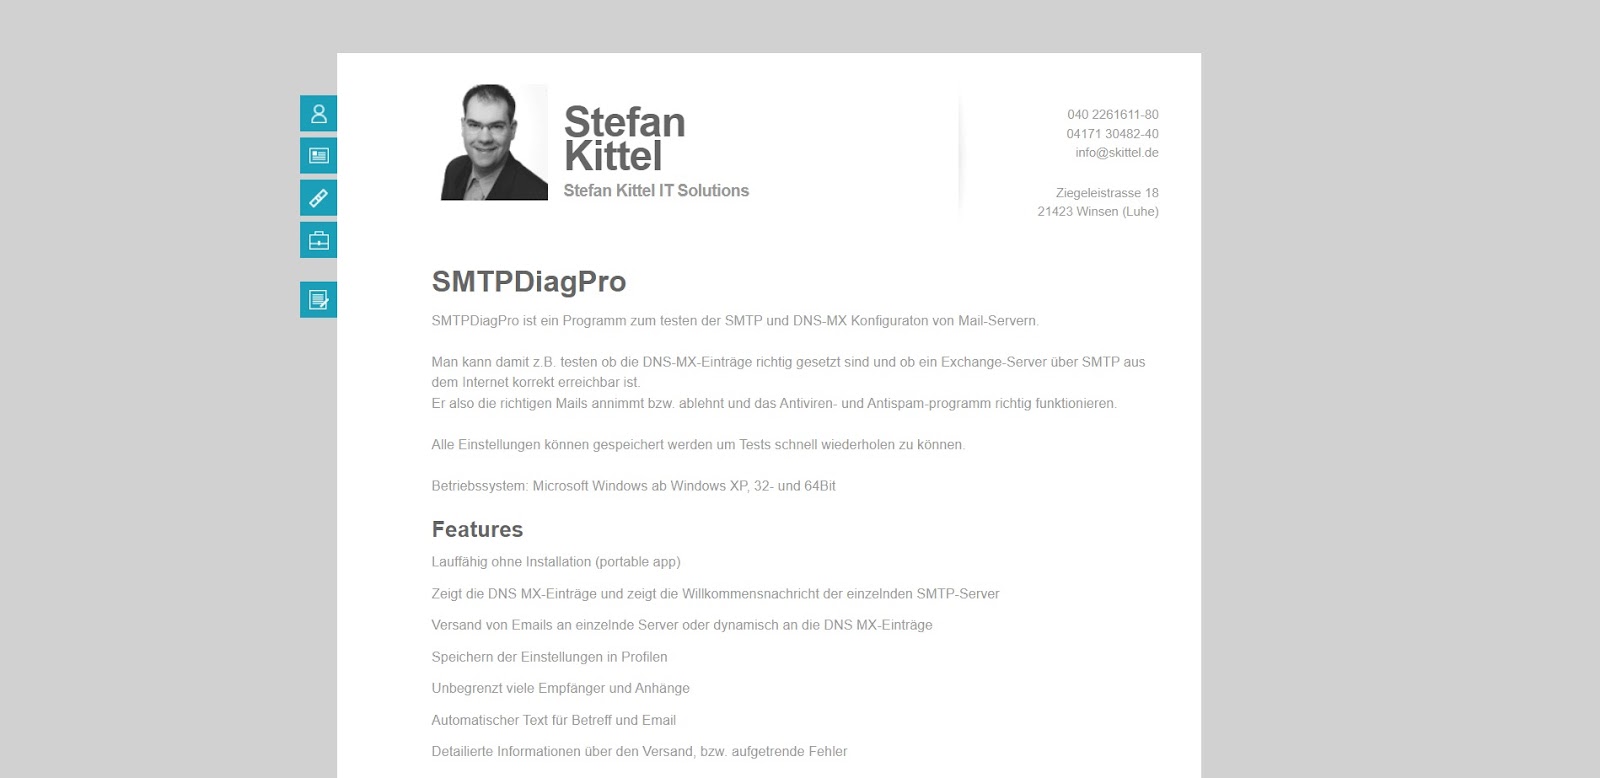 A screenshot of SMTP DiagPro's website